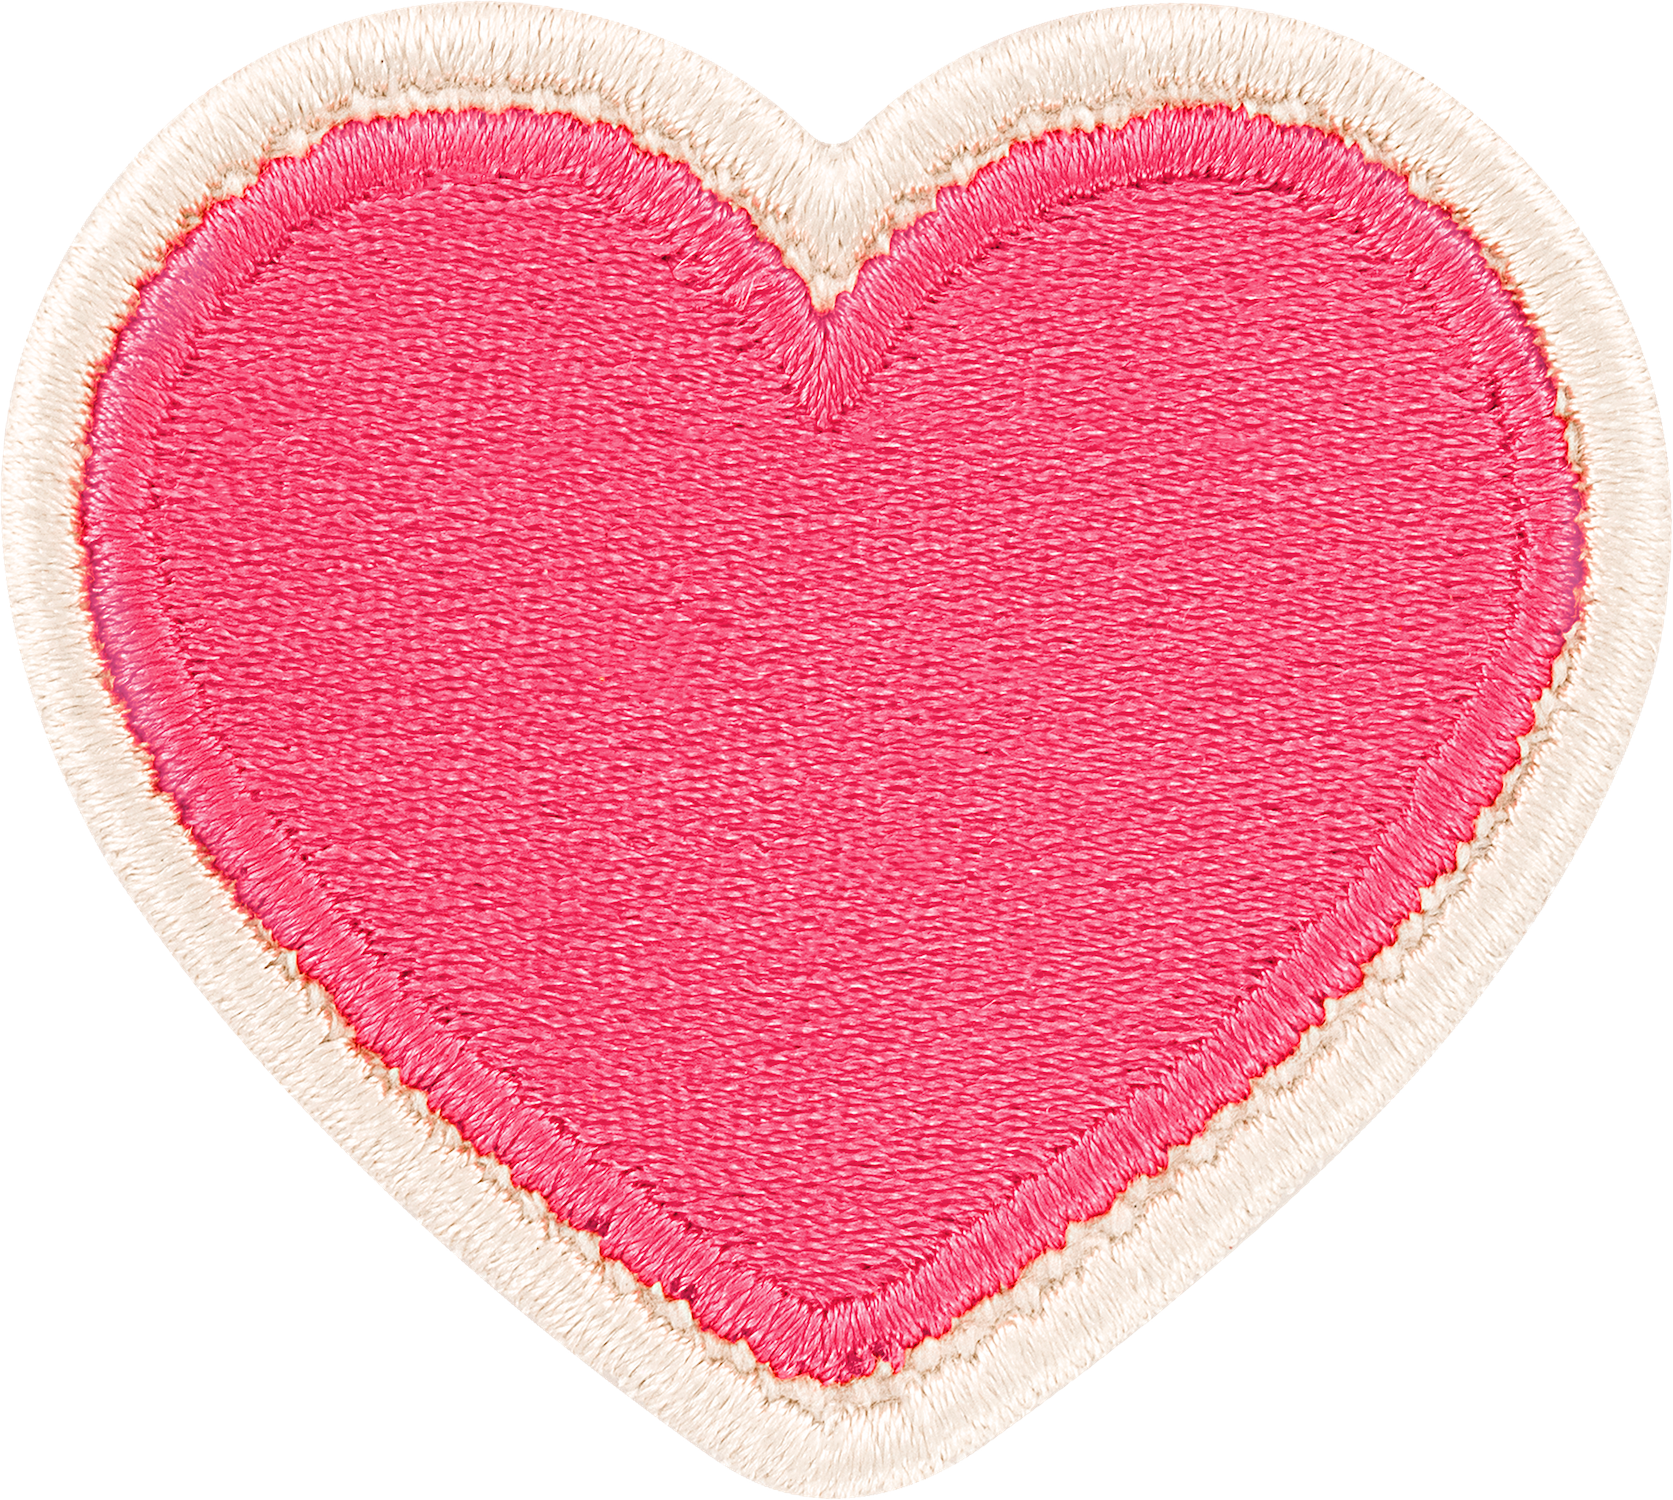 Bubblegum Embroidery Heart Sticker Patch | Stoney Clover Lane